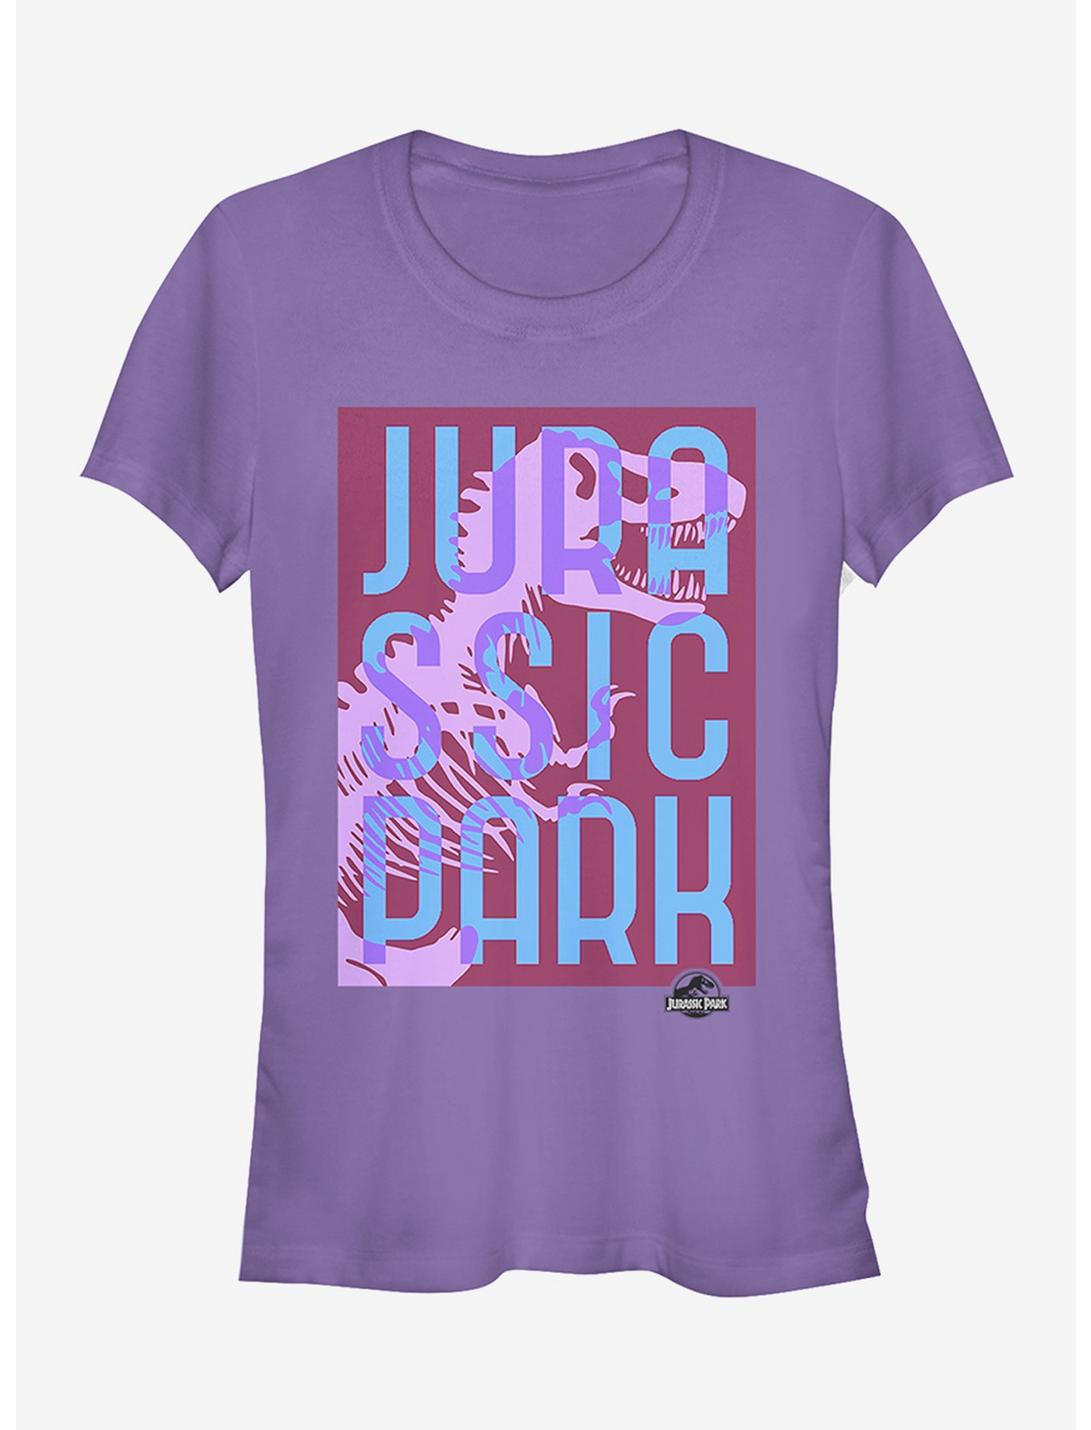 Jurassic Park T. Rex Overlap Text Girls T-Shirt, PURPLE, hi-res